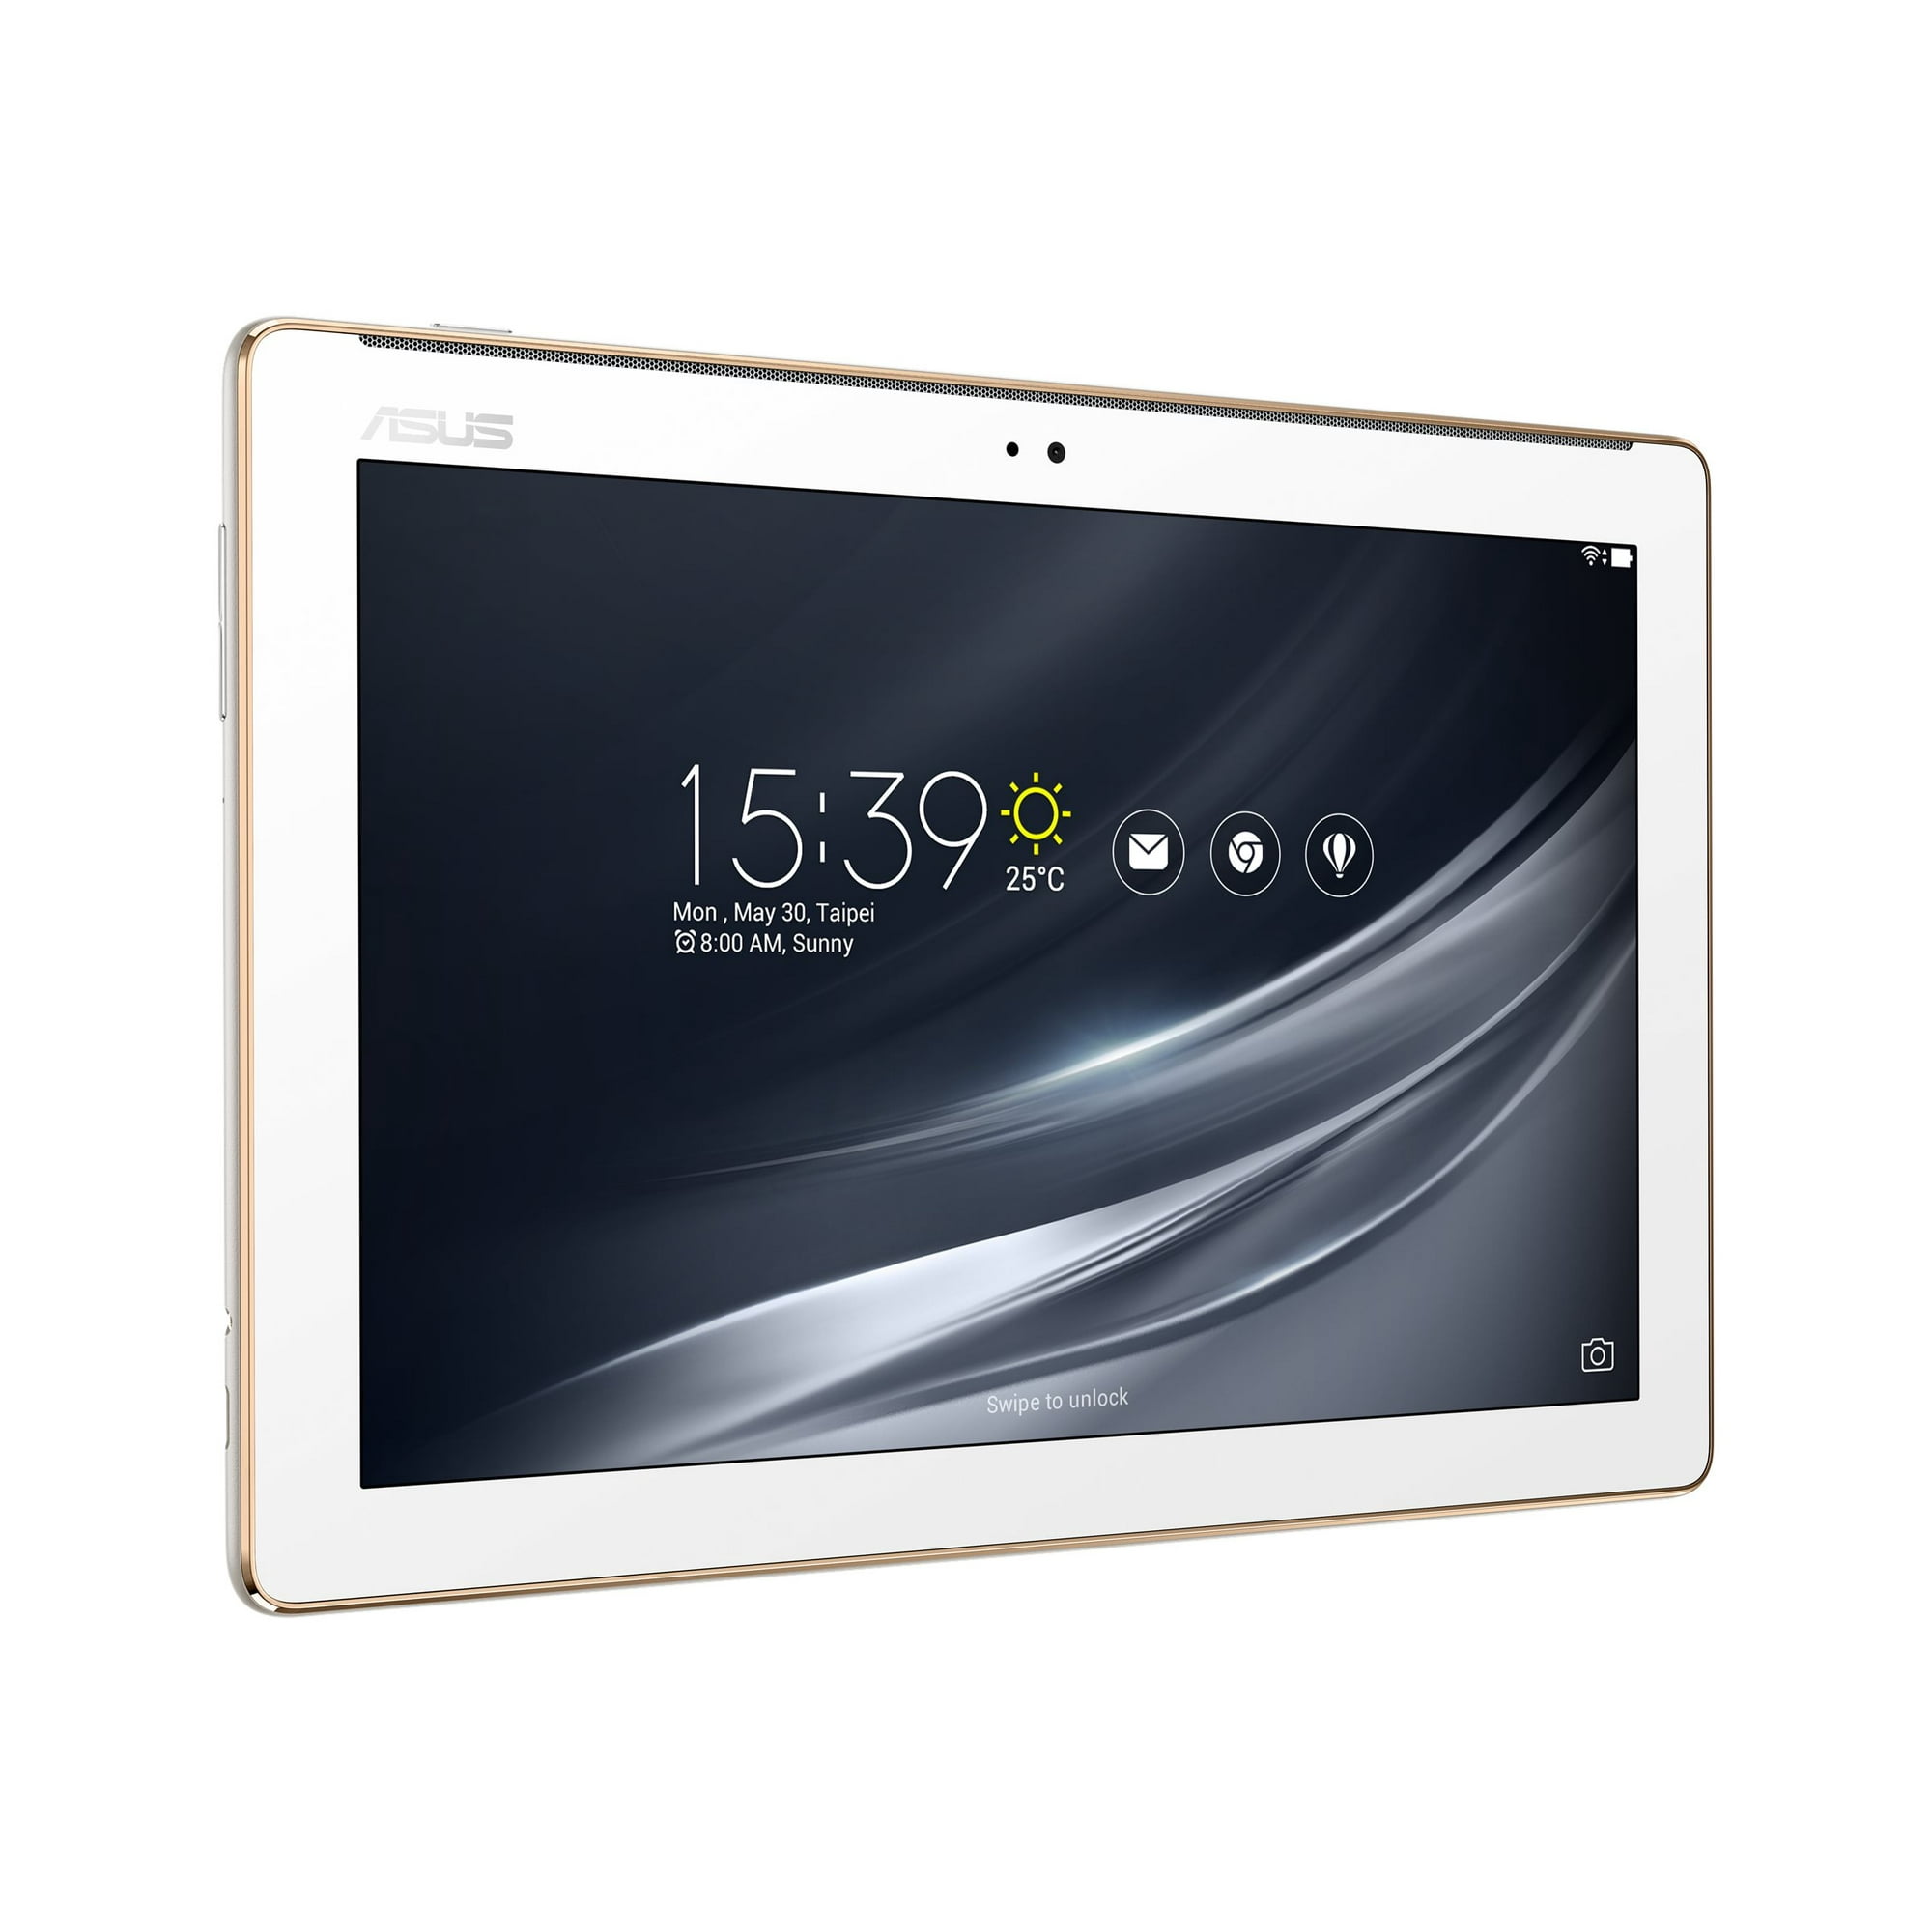 ASUS ZenPad 10 Z301M - Tablet - Android 7.0 (Nougat) - 16 GB eMMC - 10.1